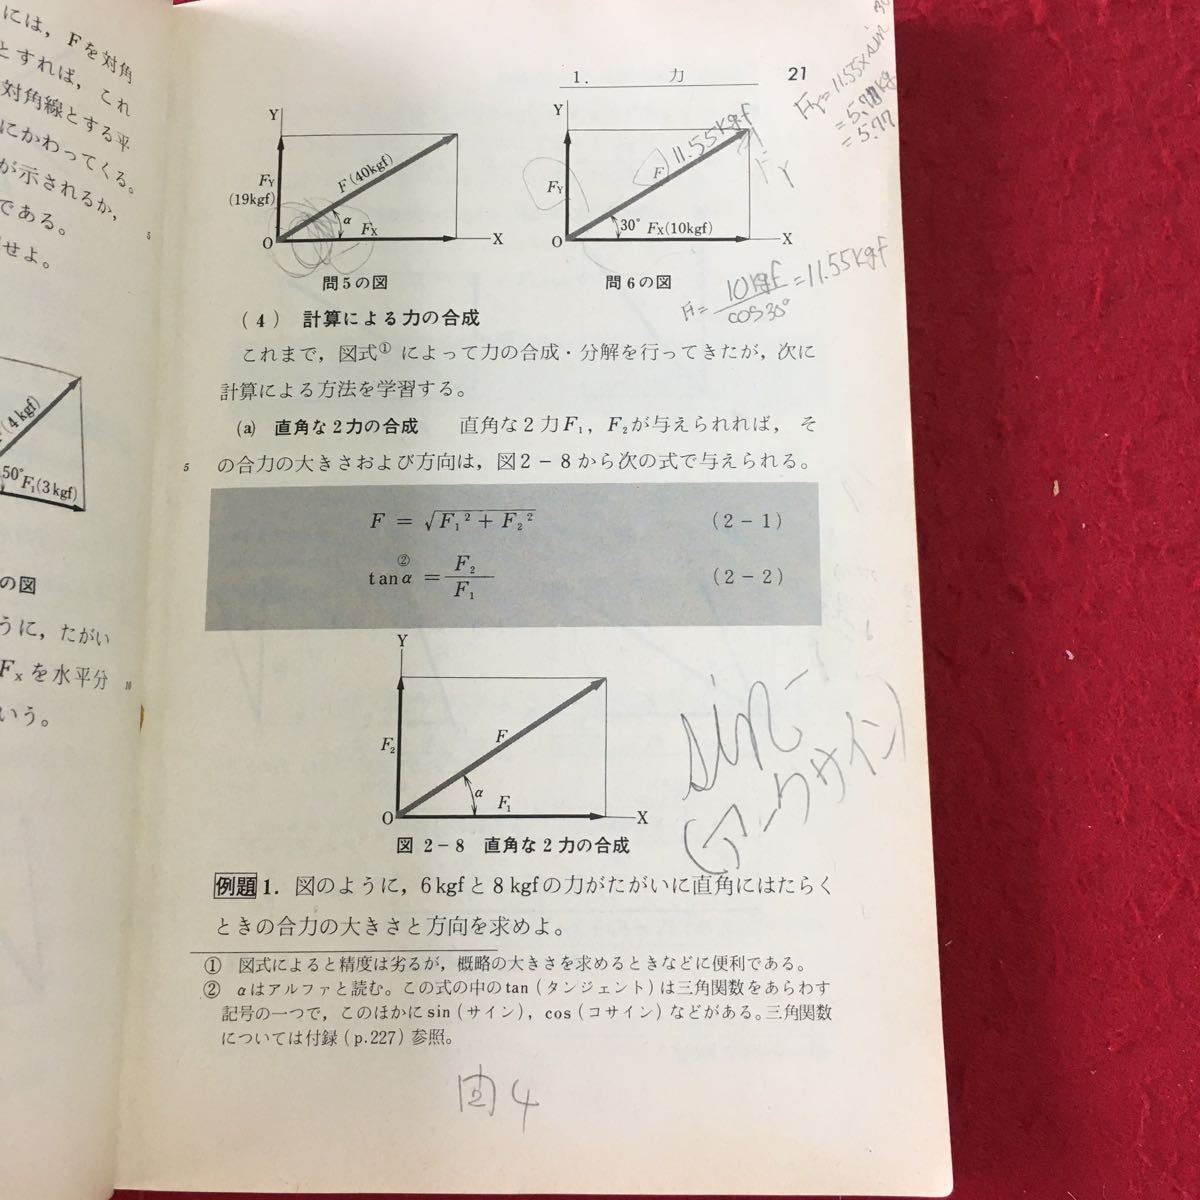 M5c-050 機械設計 1 著者 津村利光 徳丸芳男 昭和60年2月25日 発行 実教出版 教科書 工学 機械 設計 物理学 力 運動 材料 ねじ 軸 三角関数_書き込み有り